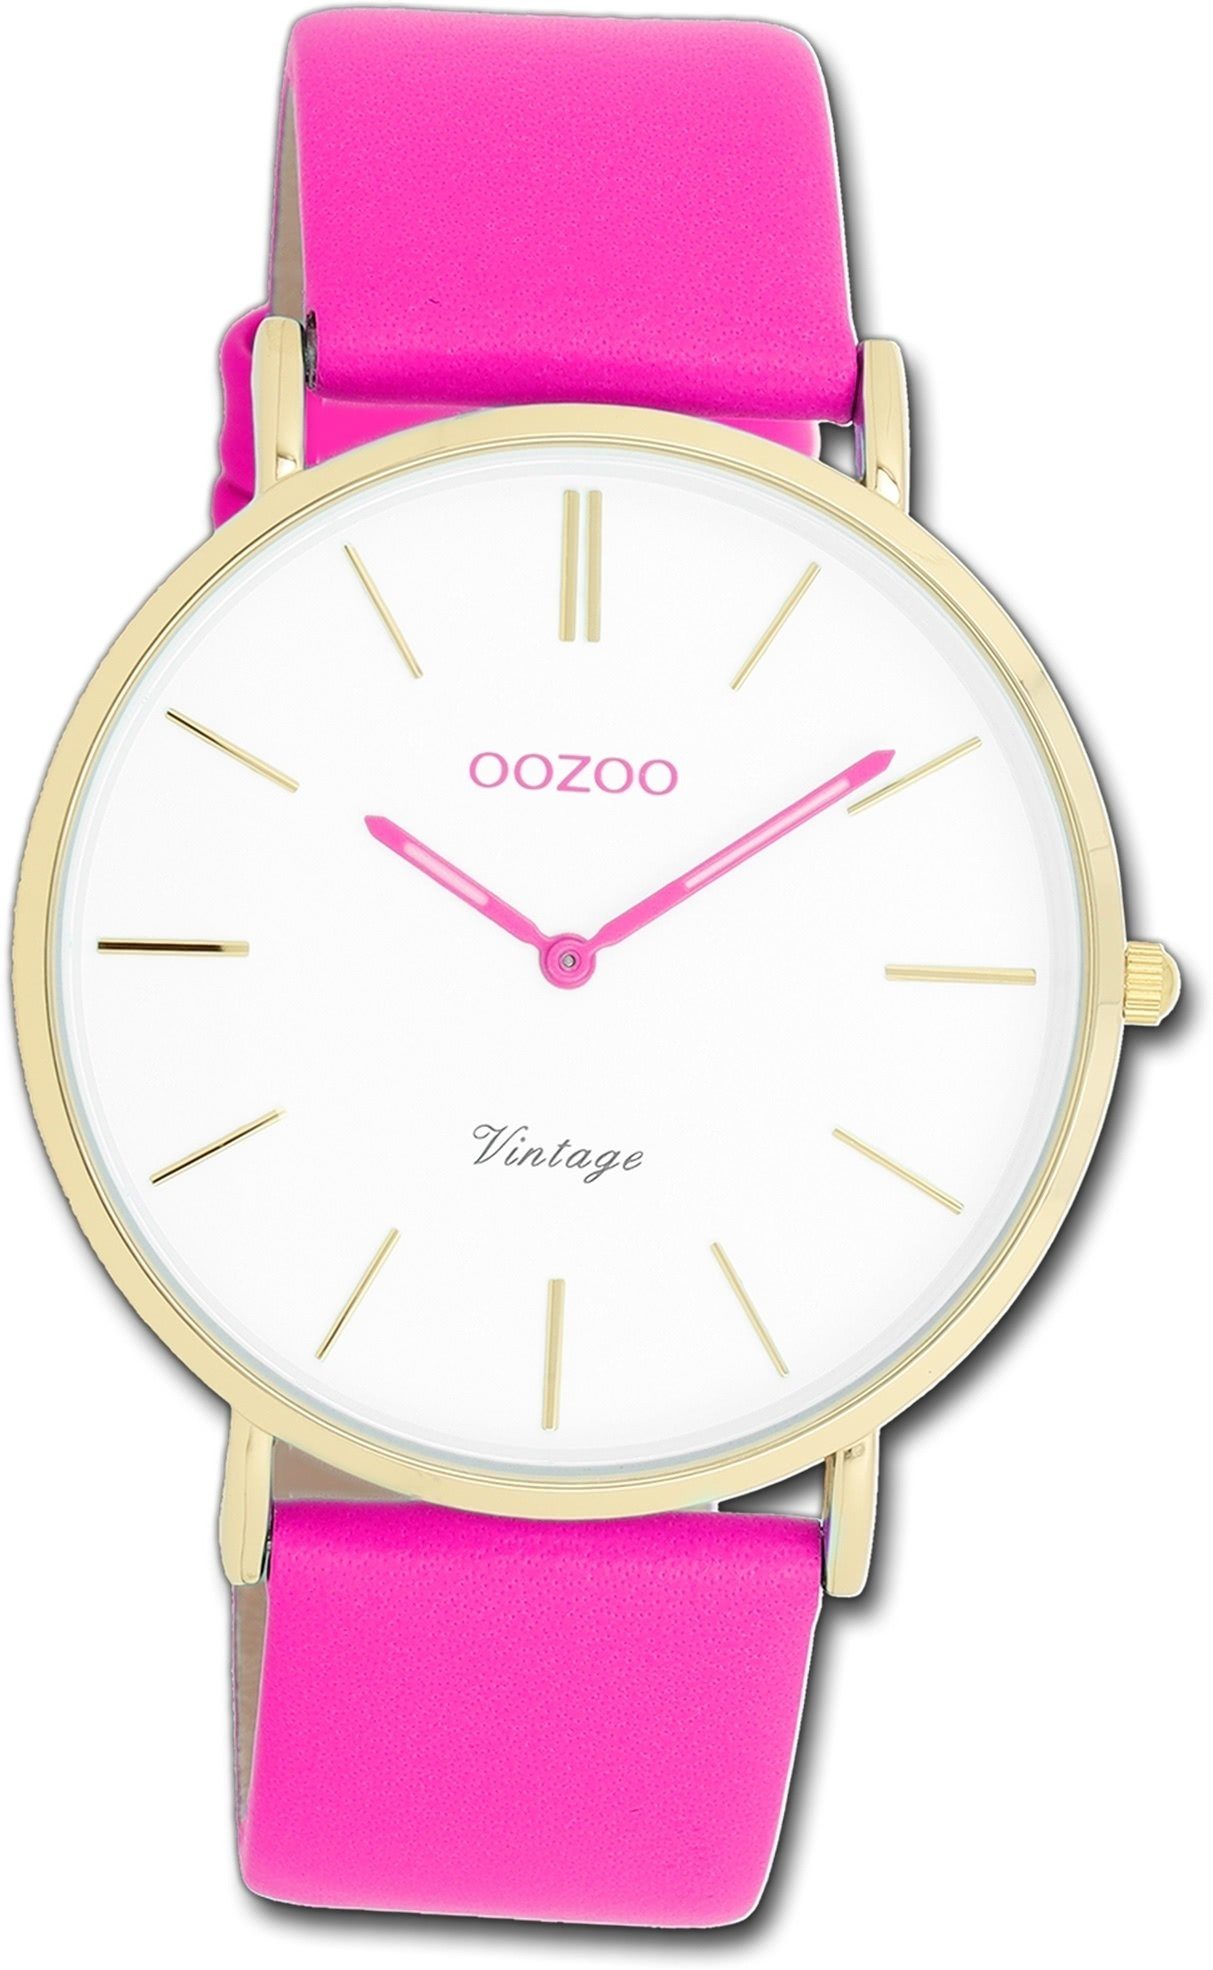 OOZOO Quarzuhr Oozoo Damen Armbanduhr Vintage pink, Damenuhr Lederarmband pink, rundes Gehäuse, groß (ca. 40mm)